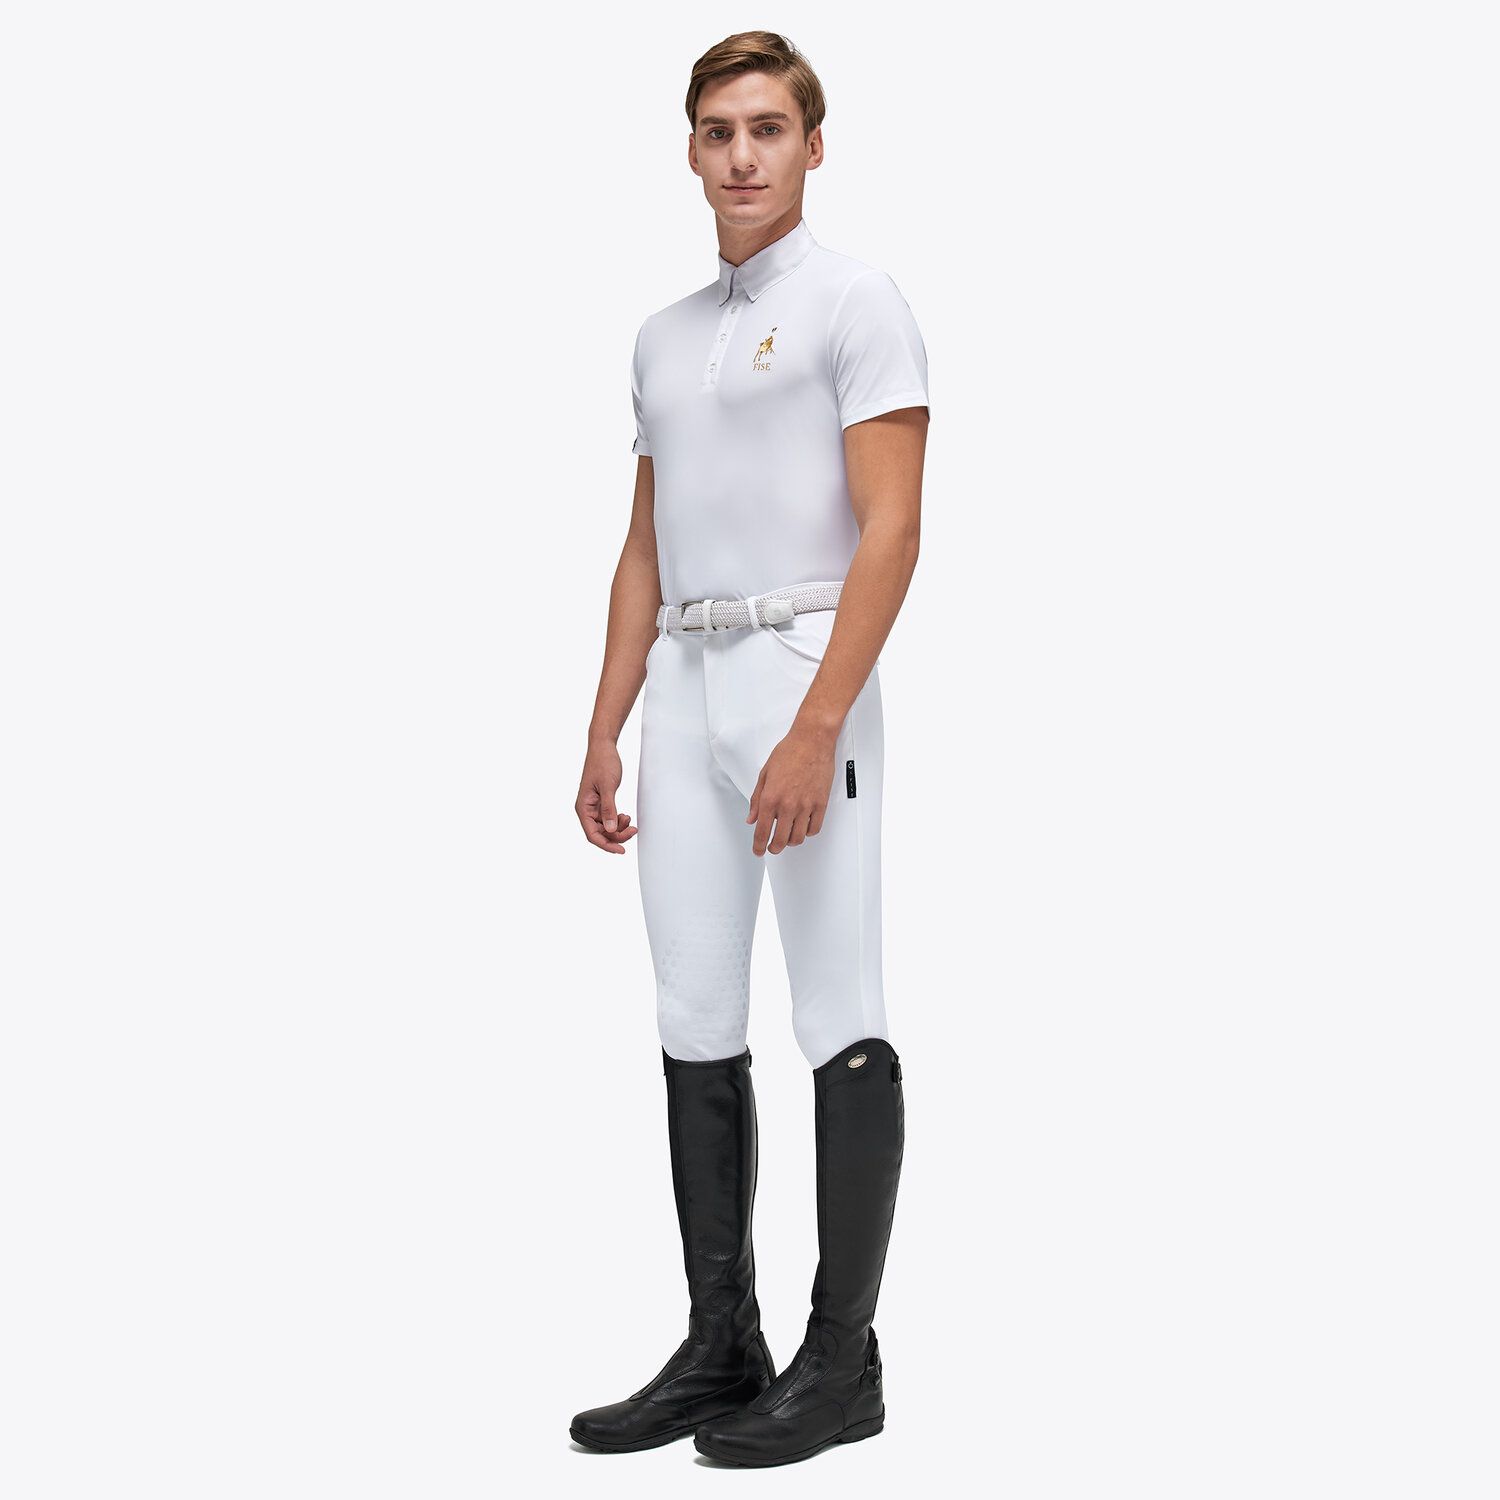 Cavalleria Toscana FISE men's polo shirt WHITE-2